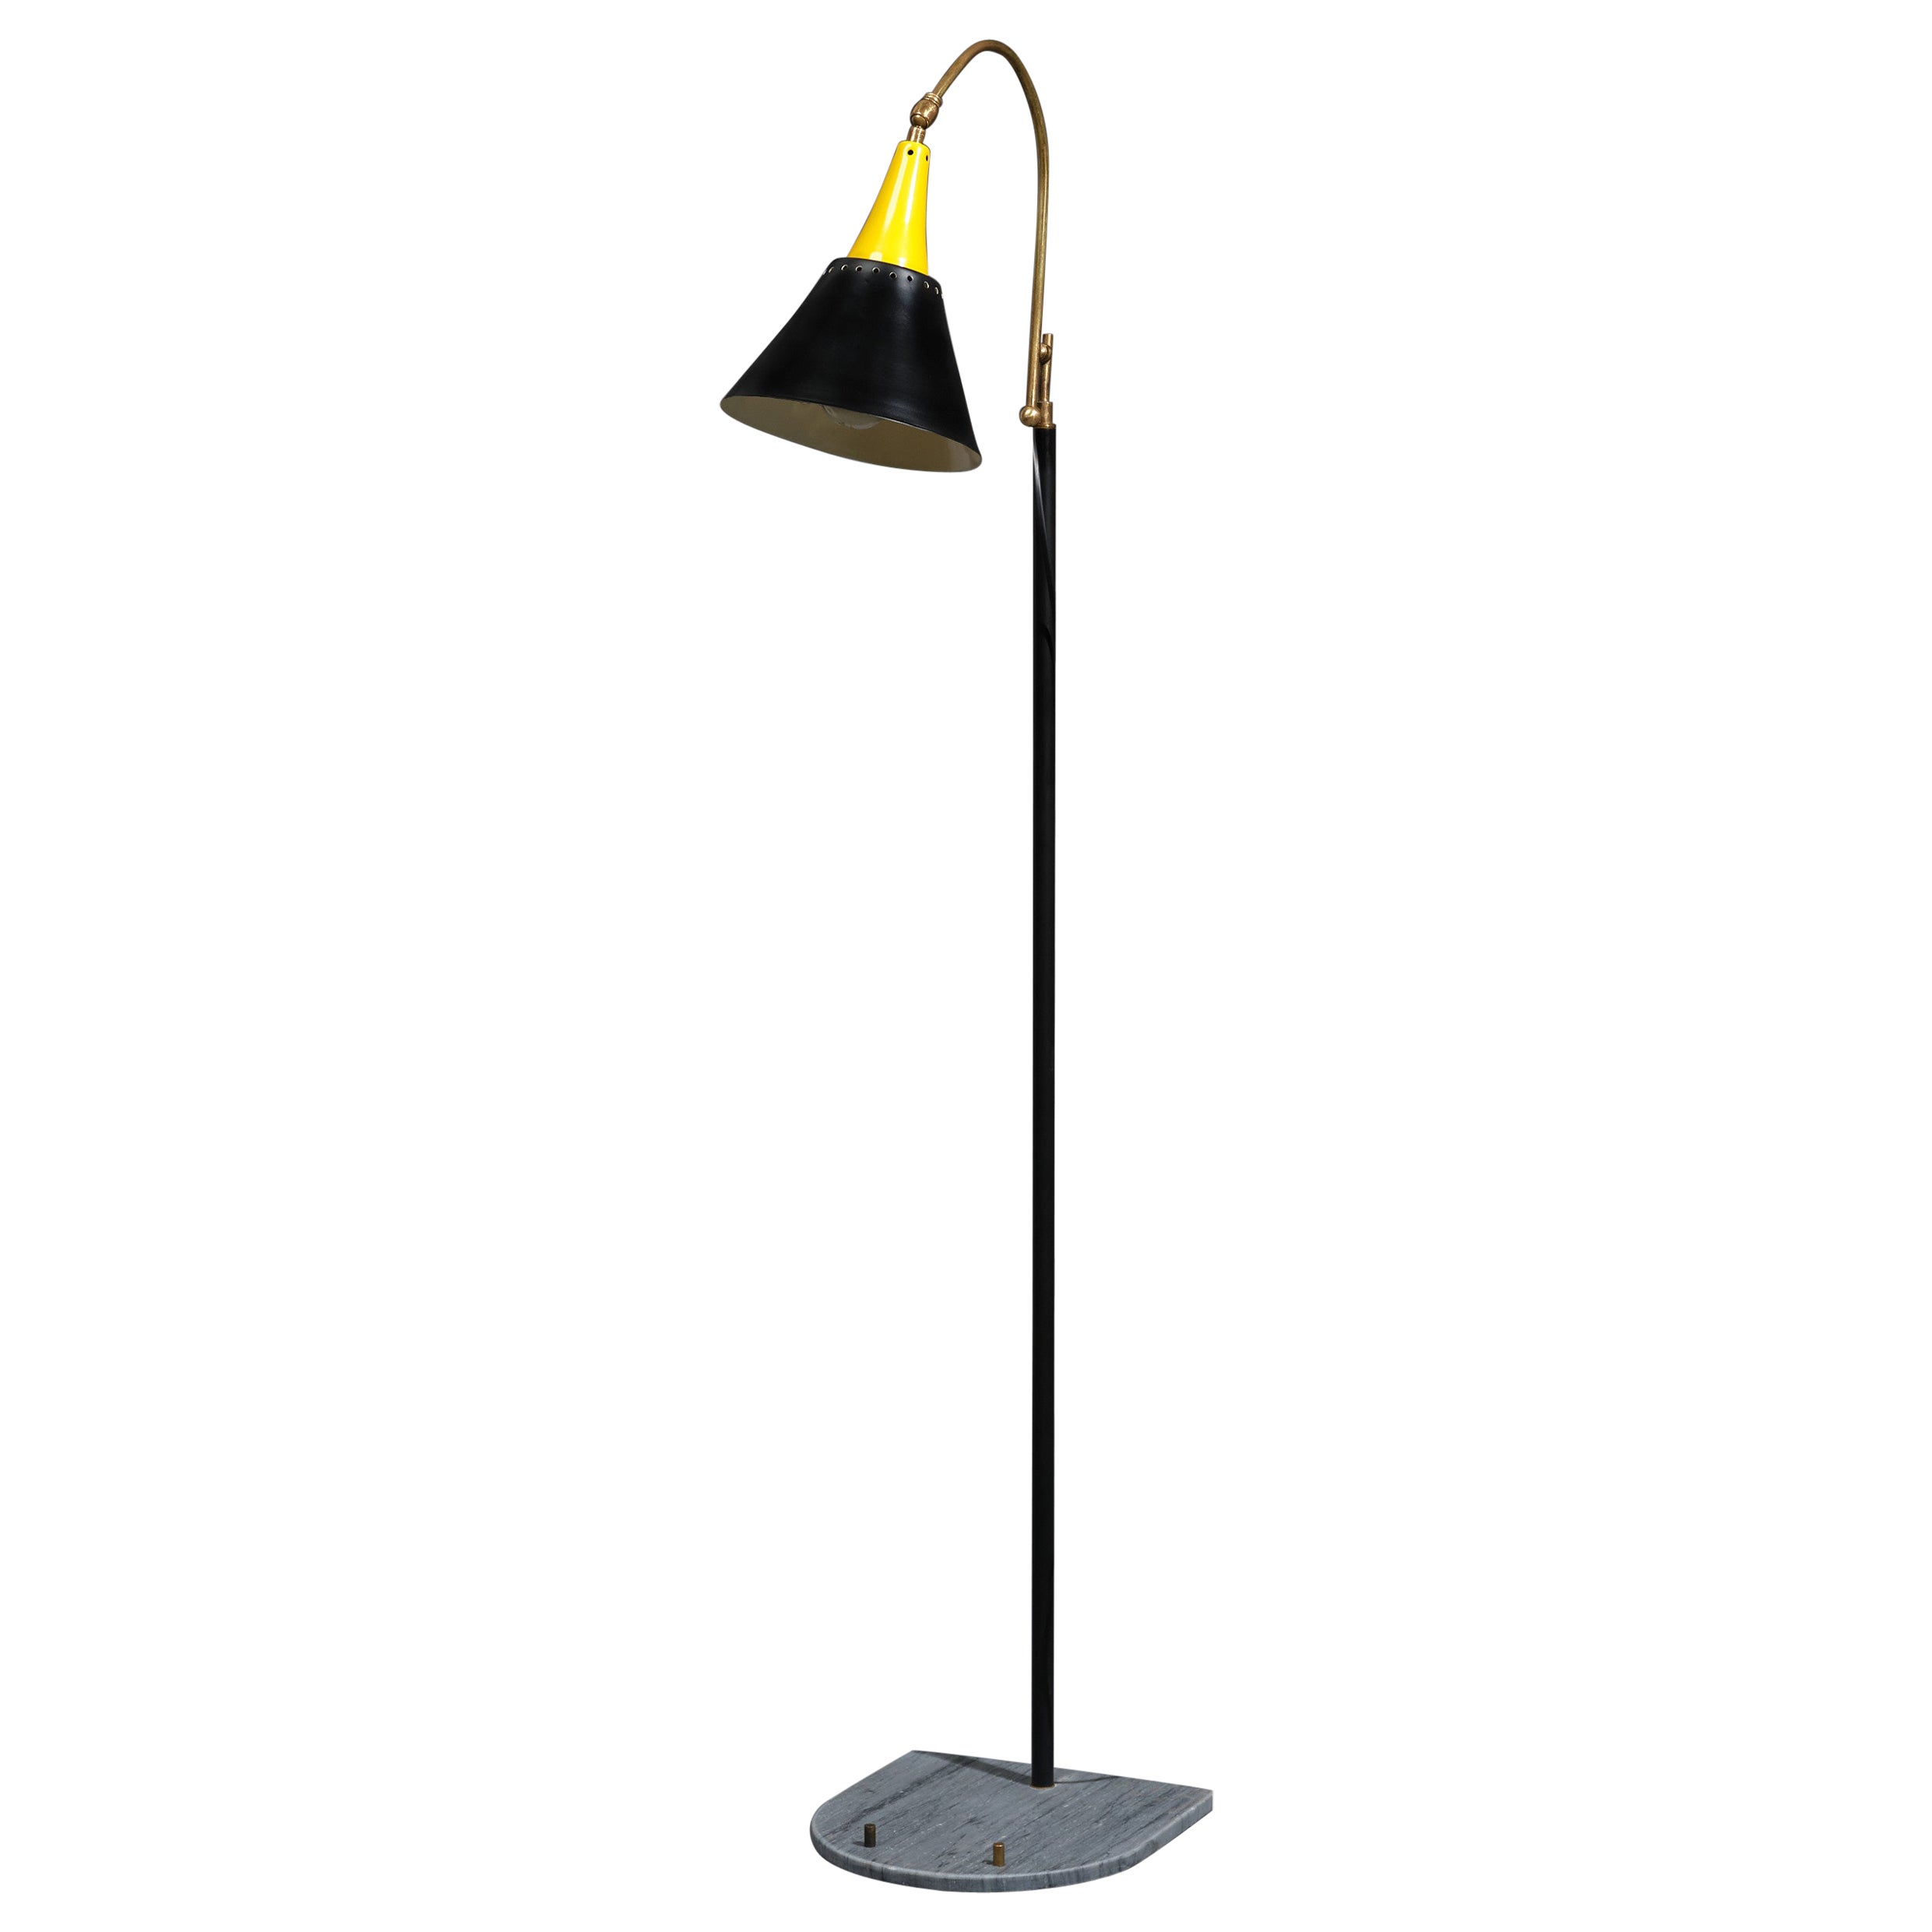 1950s Italian Design Floor Lamp - Enamel Metal Shade, Brass Accents For Sale